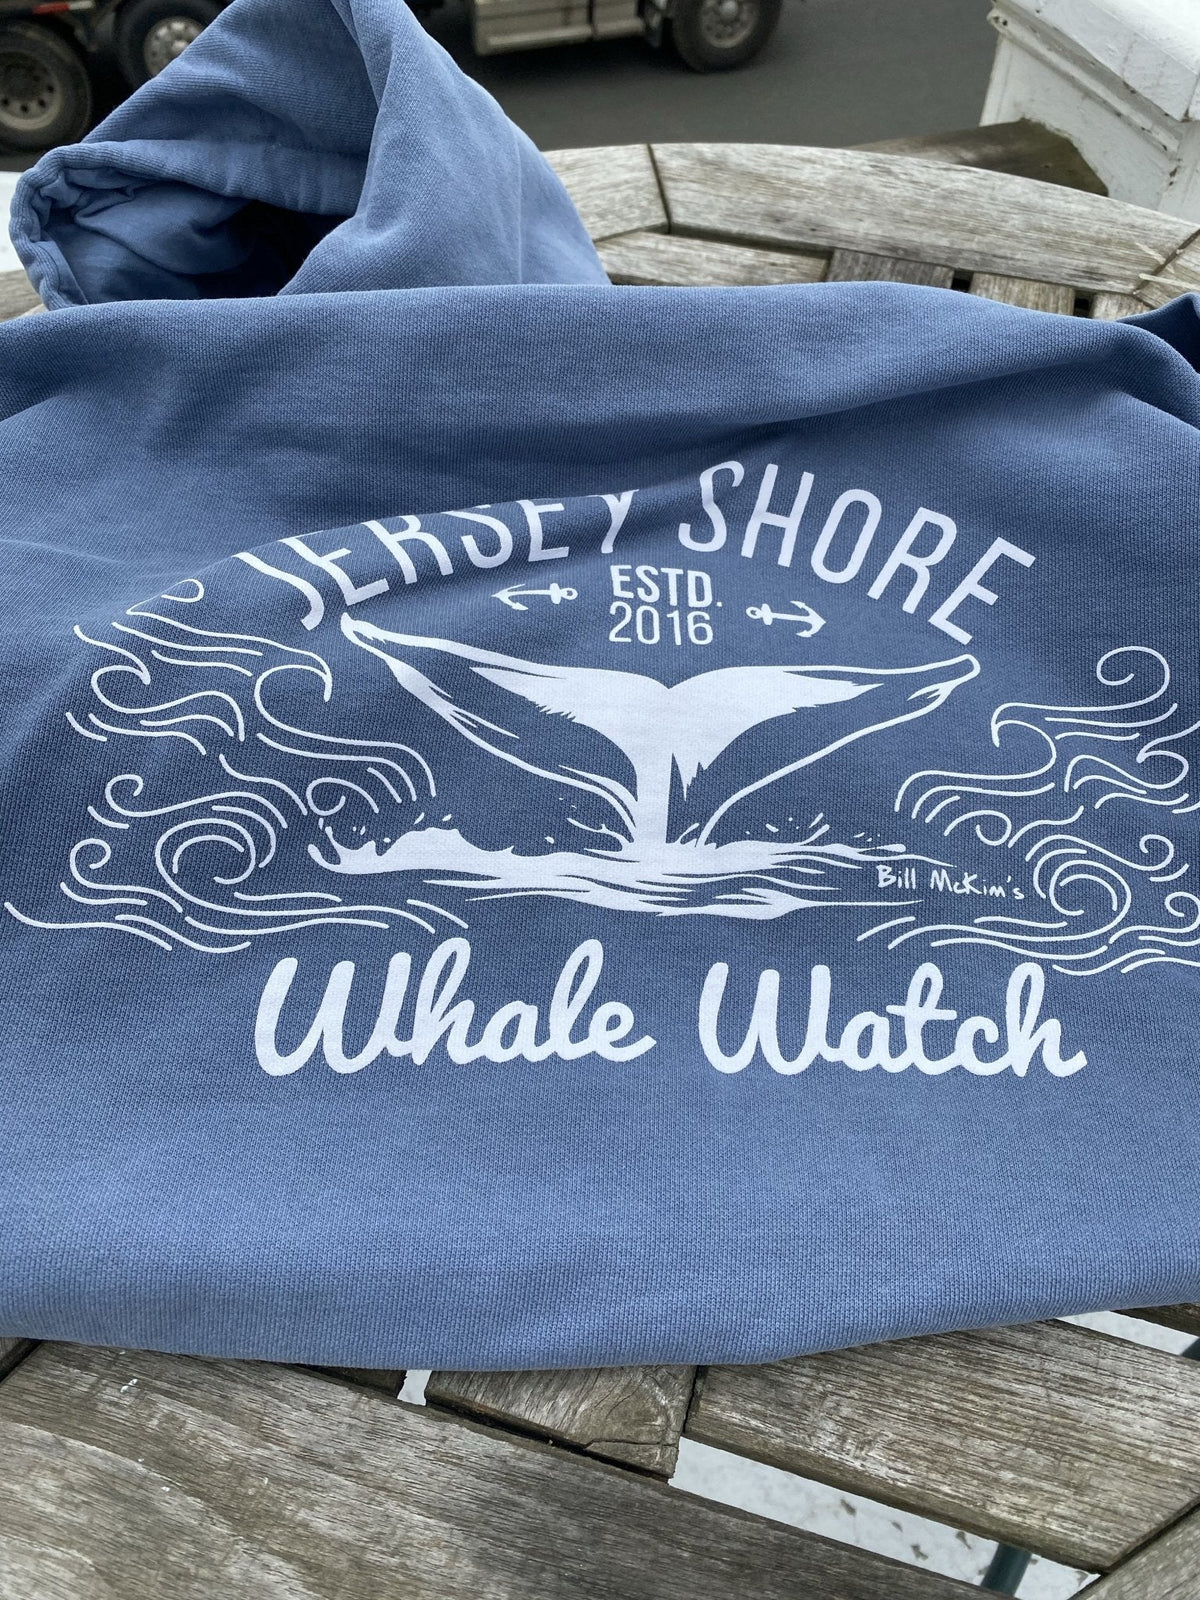 Est. 2016 Design Jersey Shore Whale Watch Heavyweight Sweatshirt printed both sides Bill McKim Photography XXXL Bluejean 